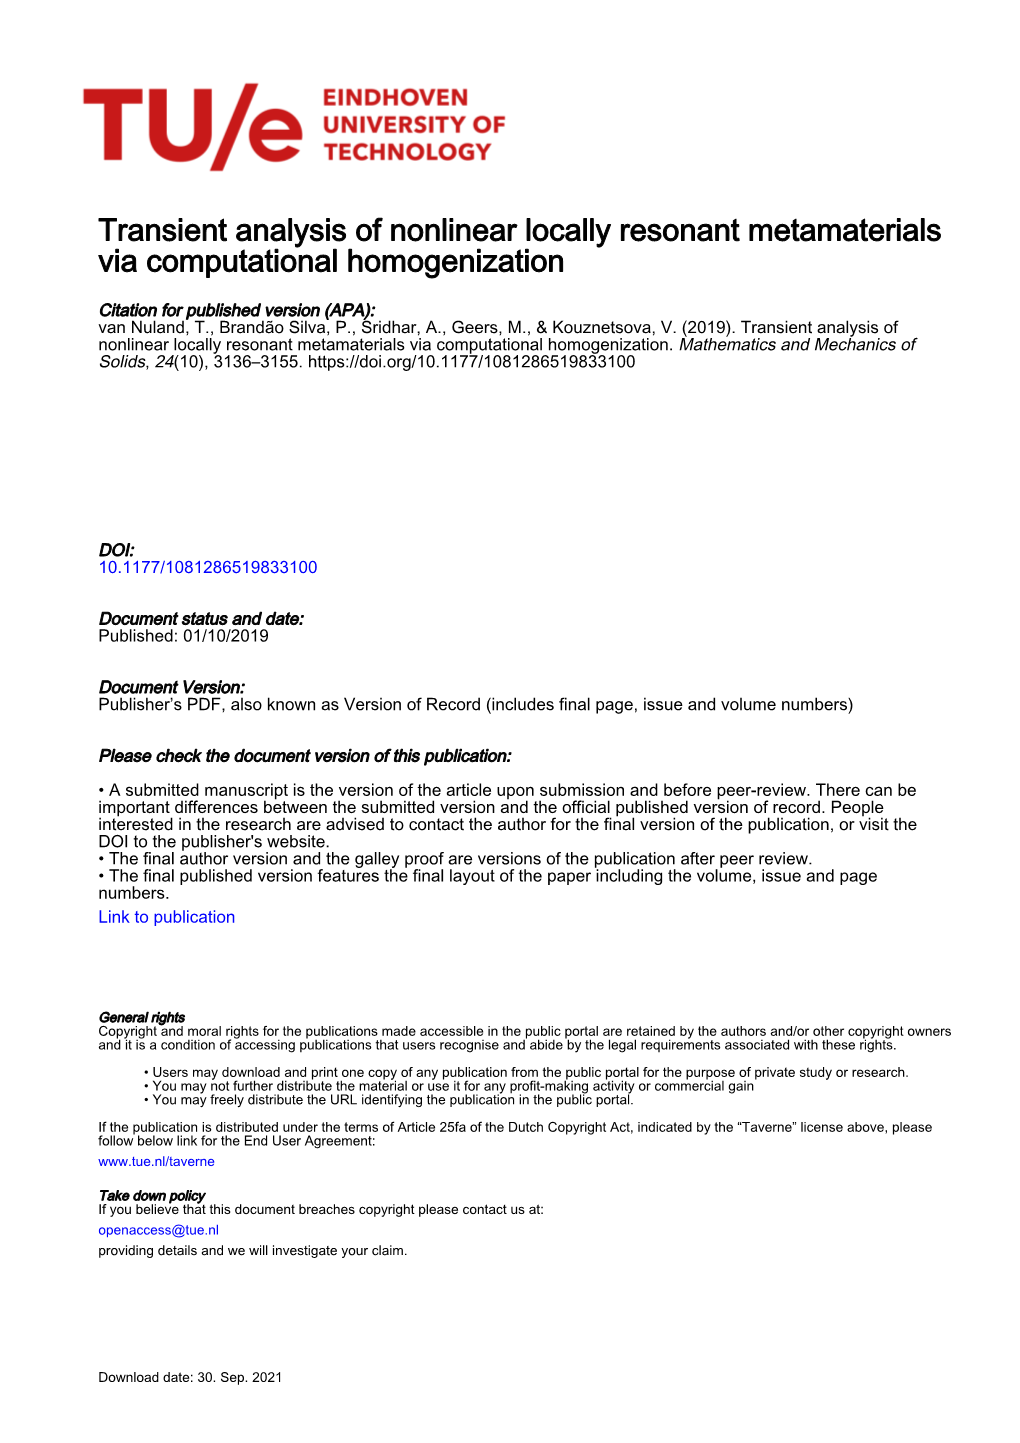 Transient Analysis of Nonlinear Locally Resonant Metamaterials Via Computational Homogenization